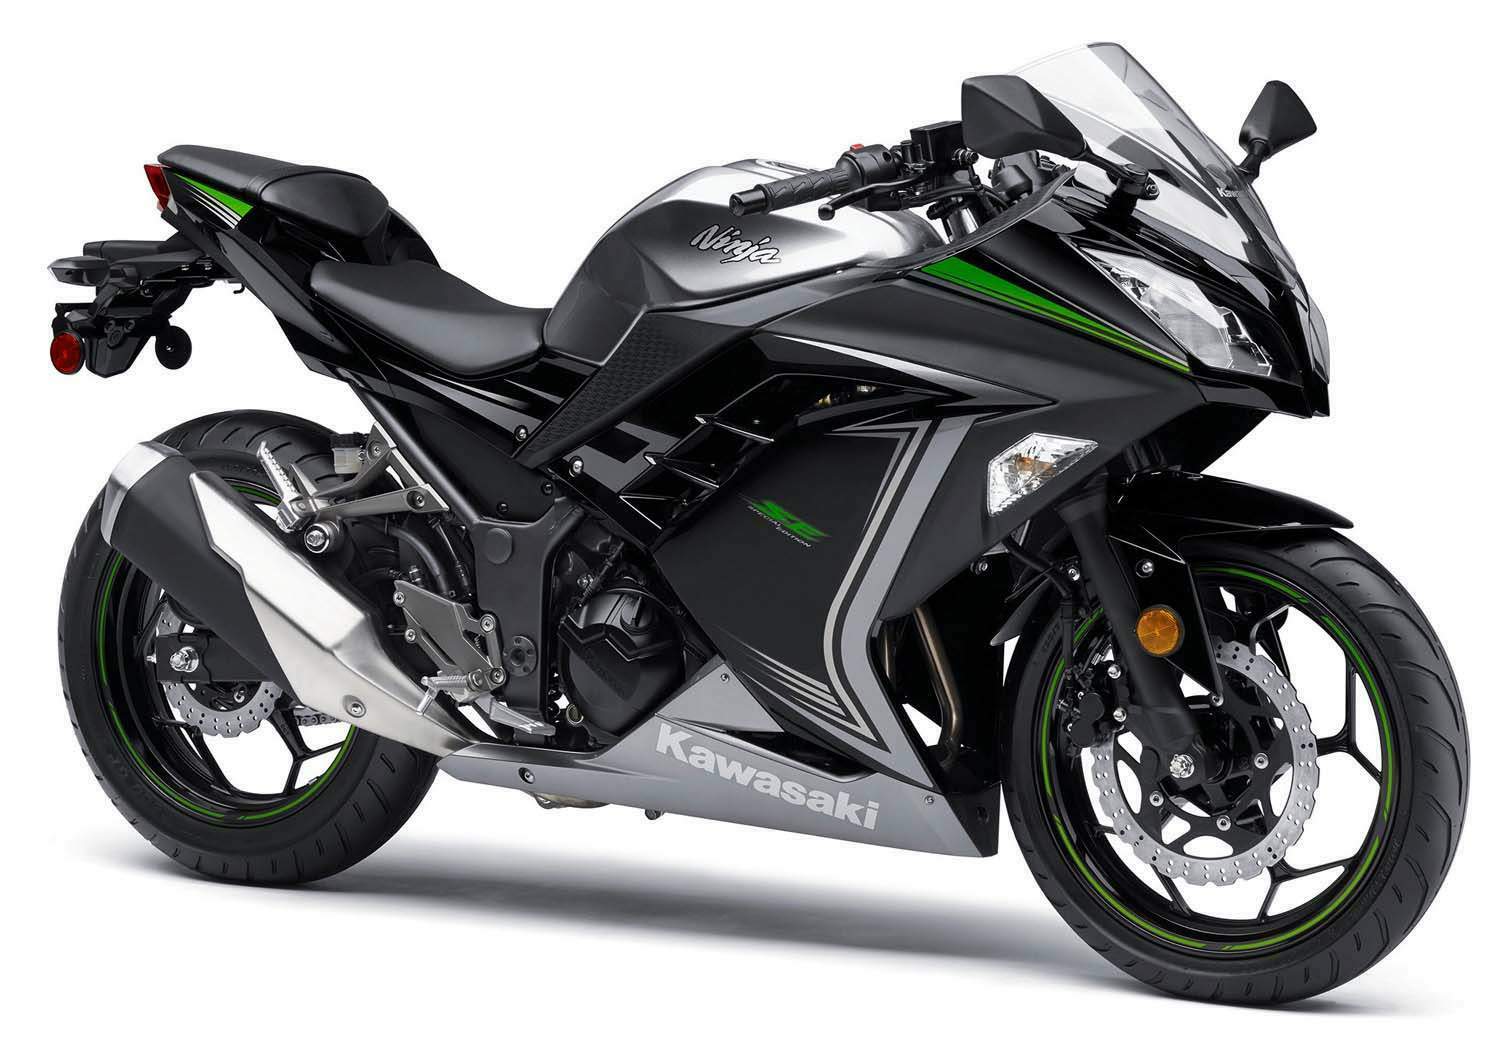 Kawasaki Ninja 300 Special Edition technical specifications